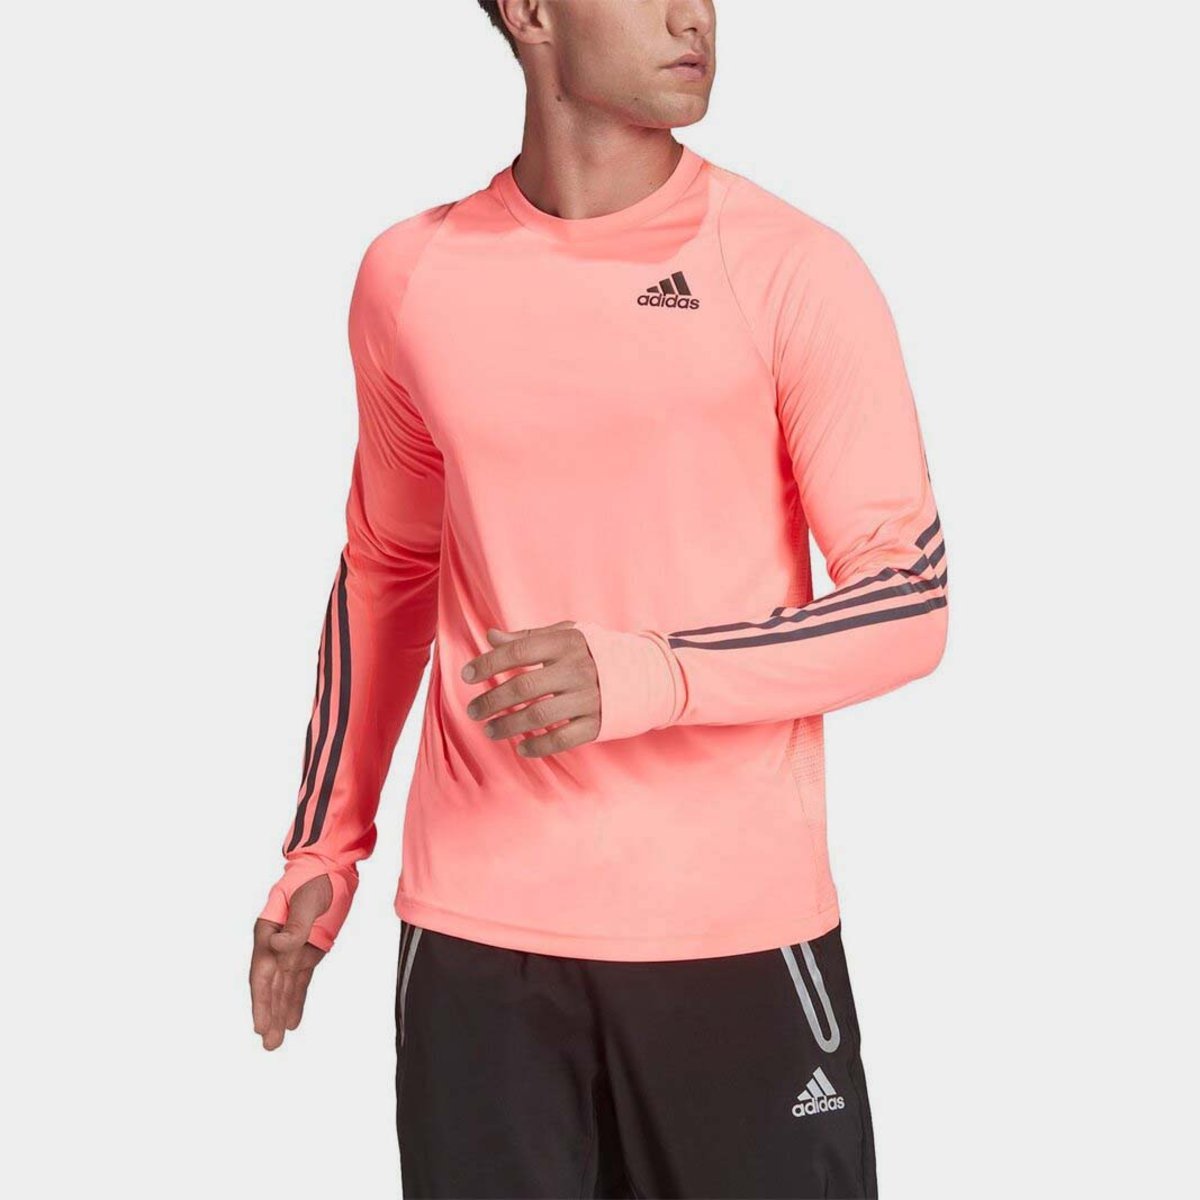 Adidas Mens Activewear Top Long Sleeve Techfit Climalite Walking